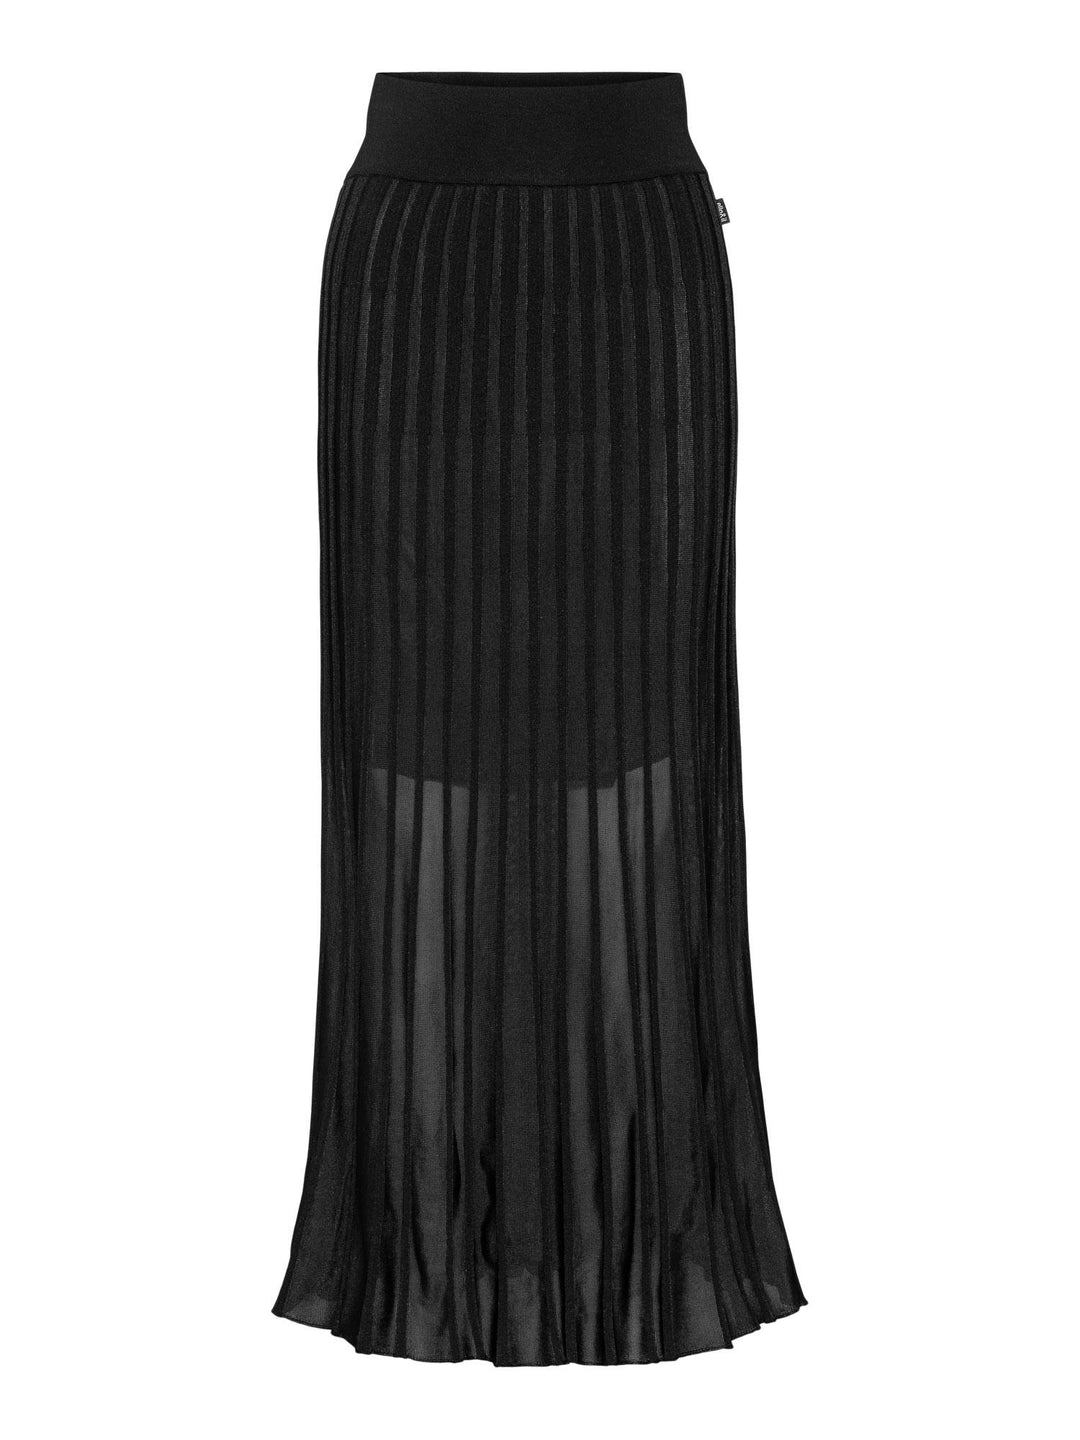 Biba ray skirt  Black